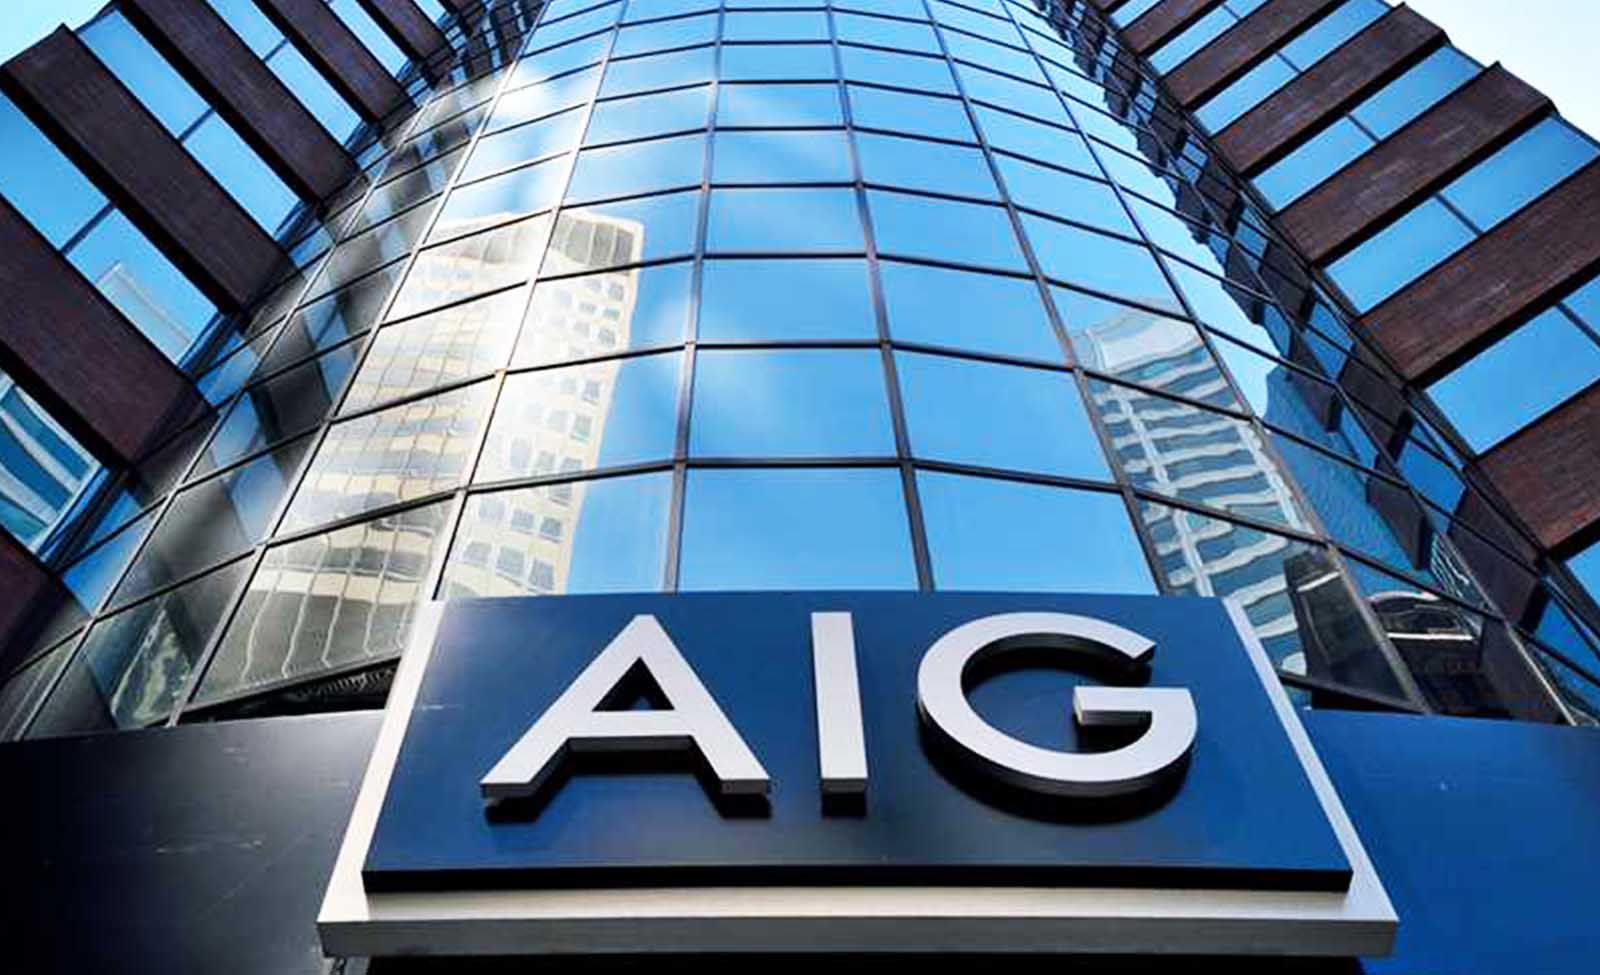 AIG Auto Insurance